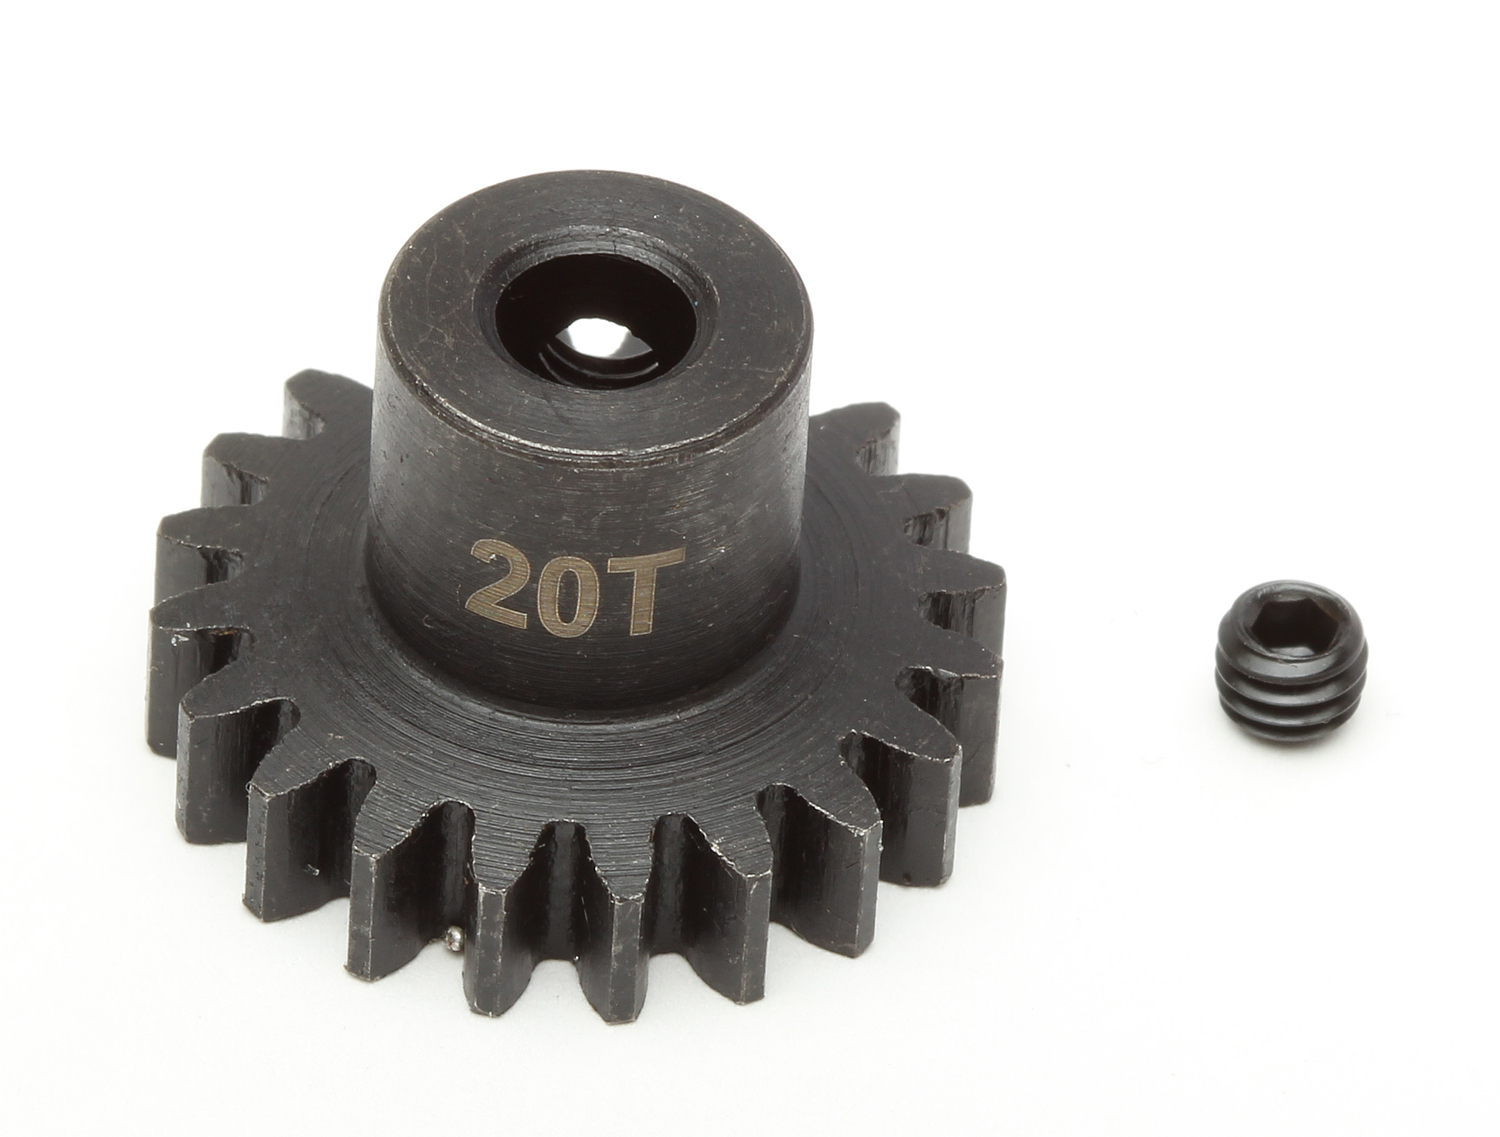 Steel Pinion Gear, 20T, Mod 1, 5 mm shaft